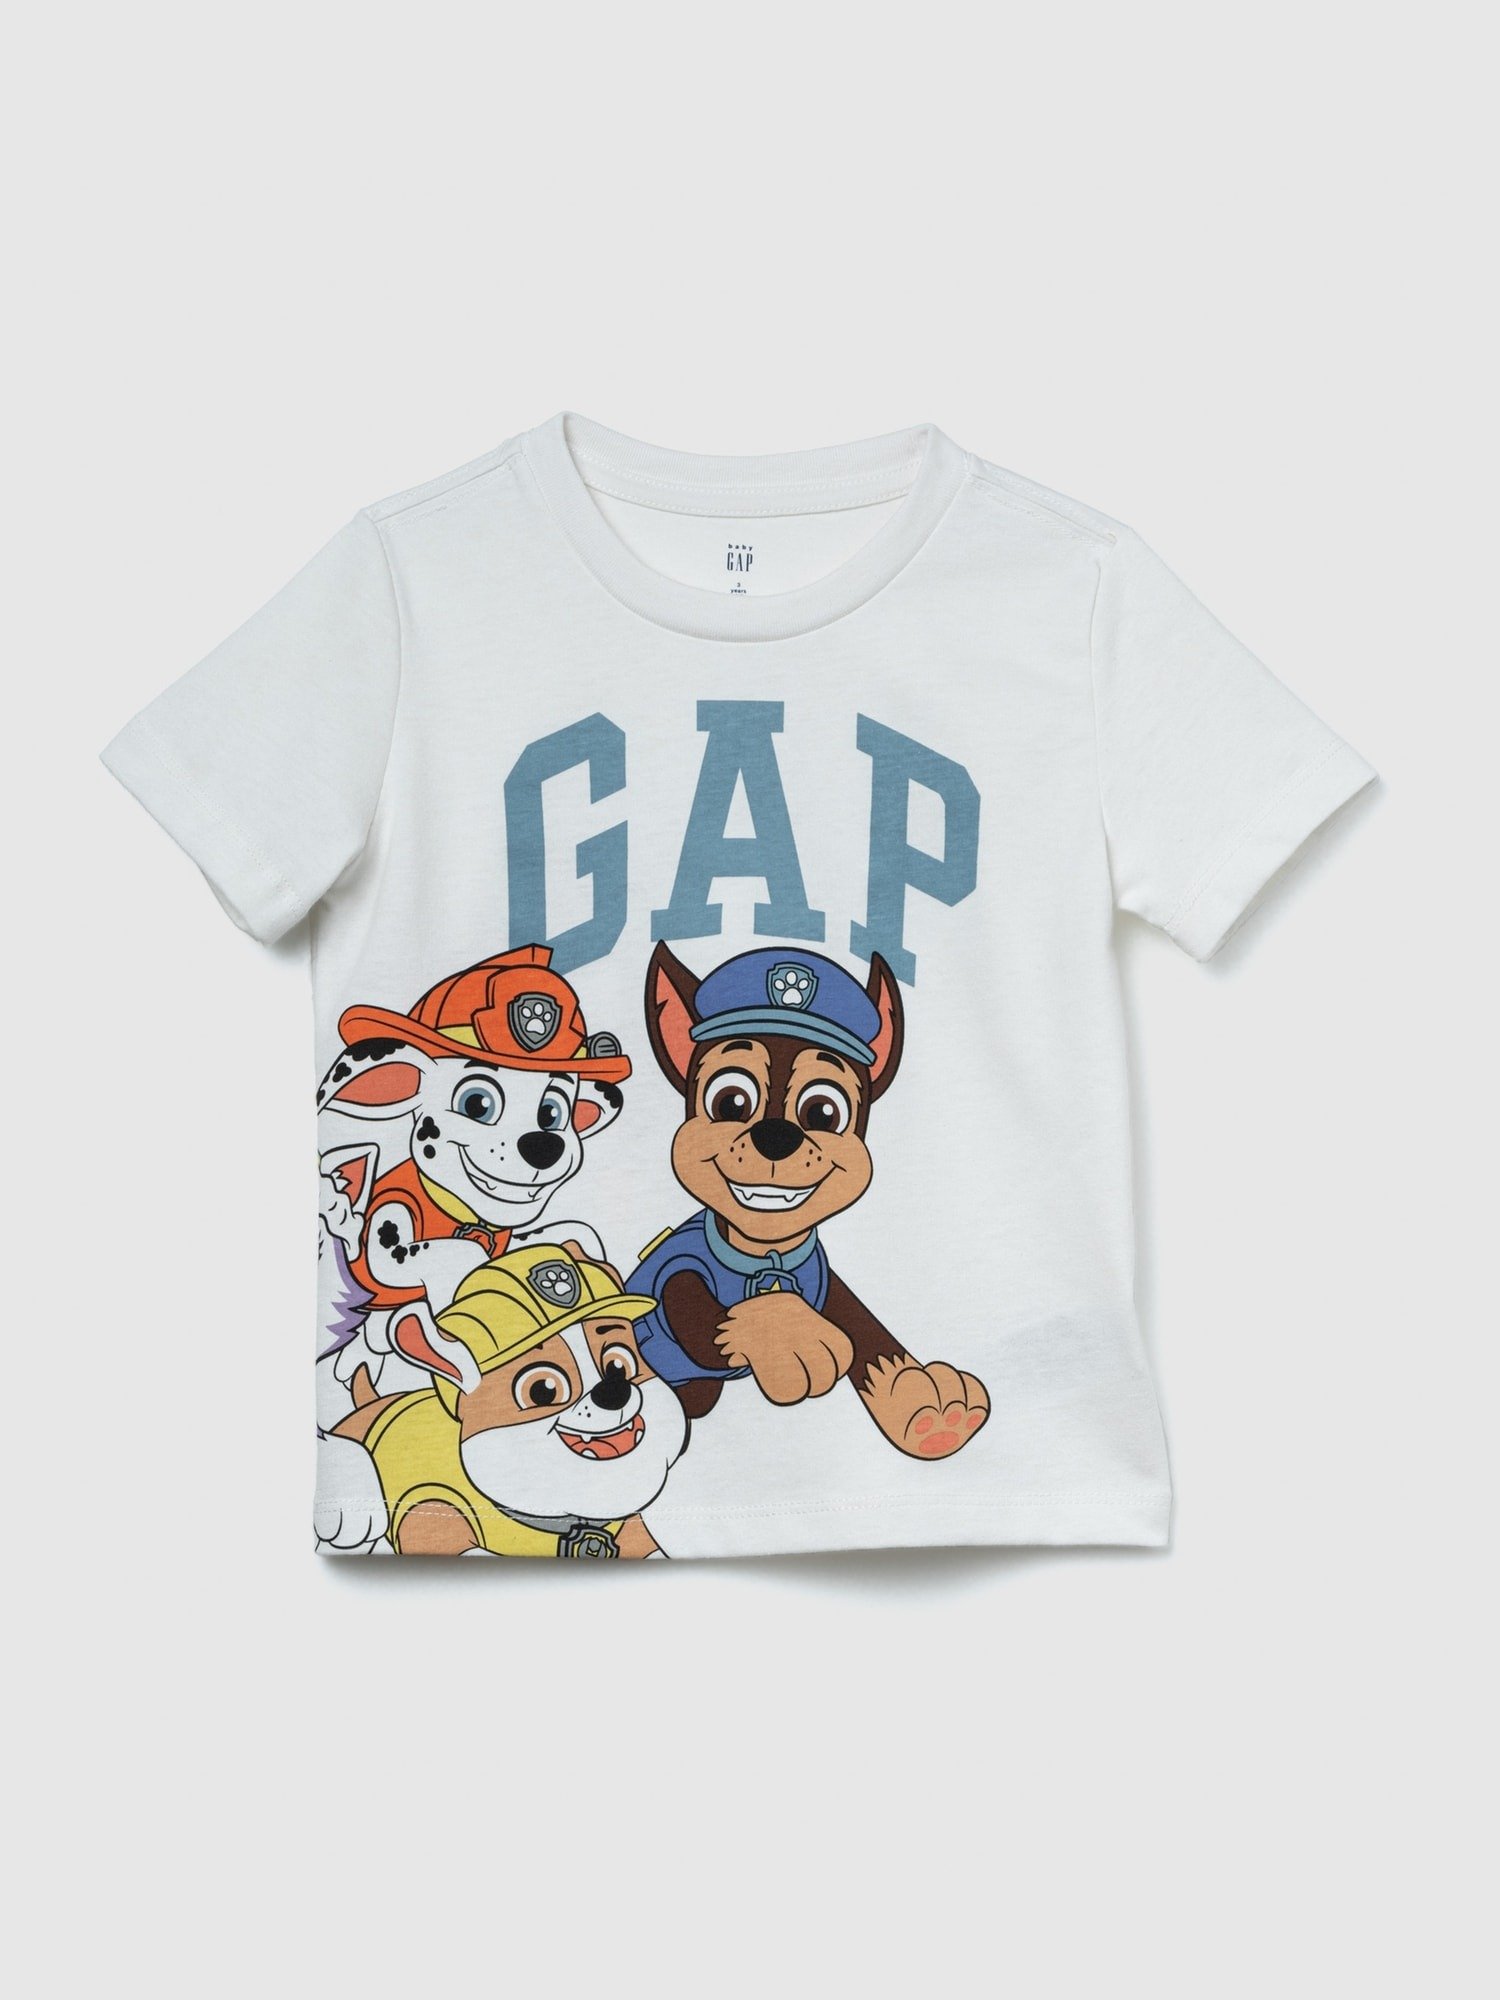 Gap Logo Paw Patrol Grafikli T-Shirt product image